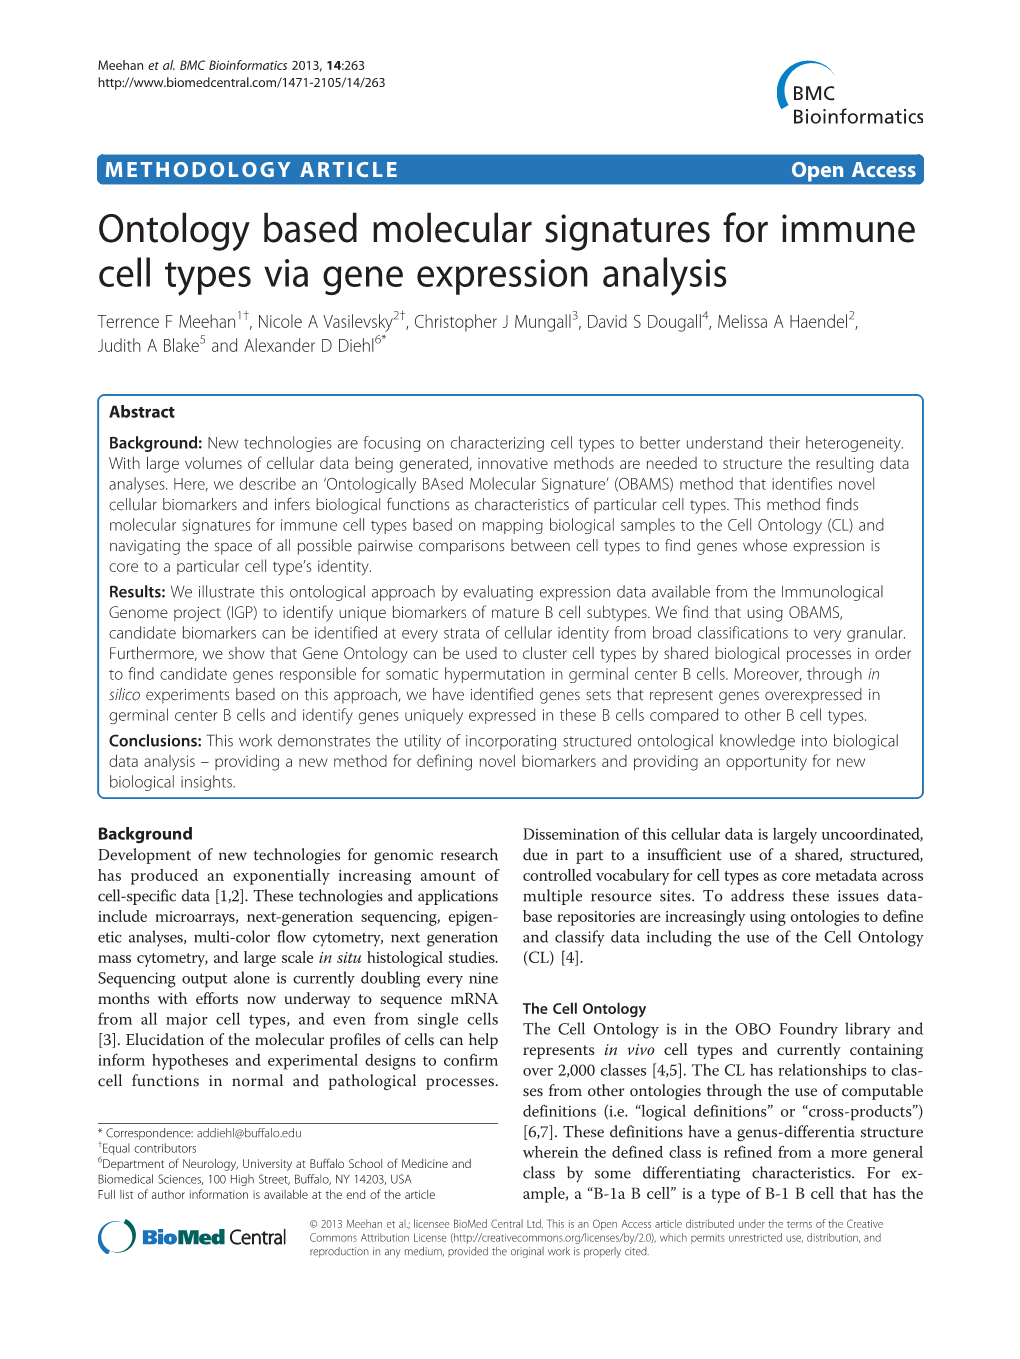 Ontology Based Molecular Signatures for Immune Cell Types Via Gene